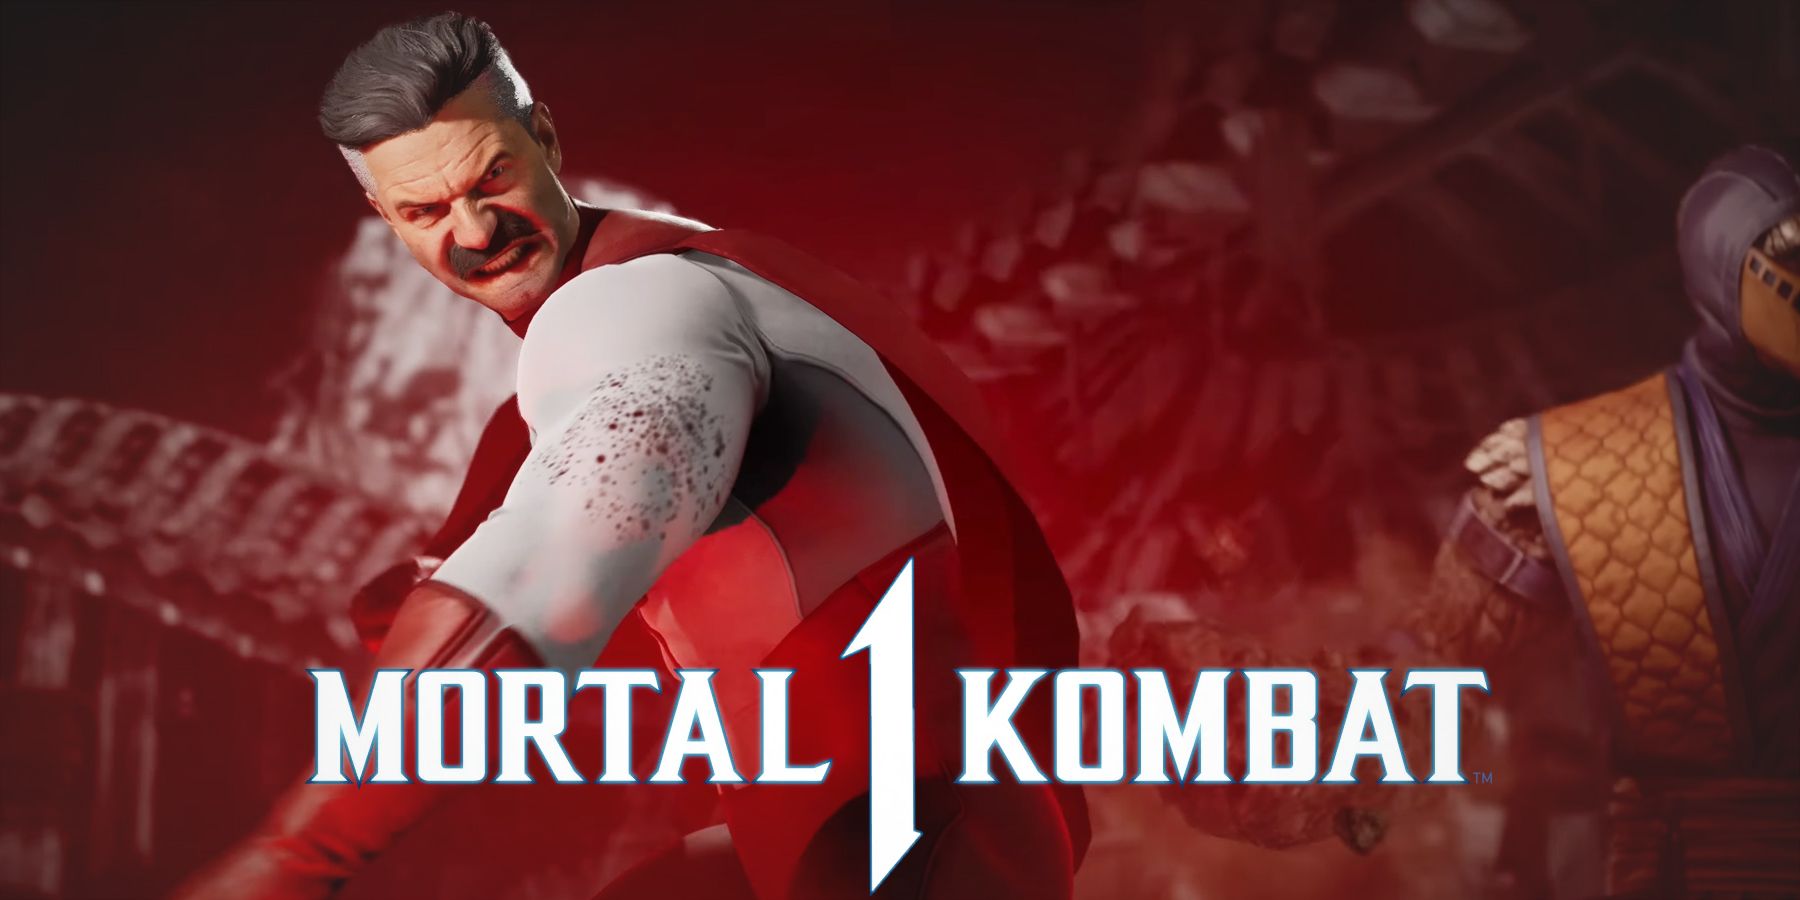 Omni-Man mid-attack behind Mortal Kombat 1 logo